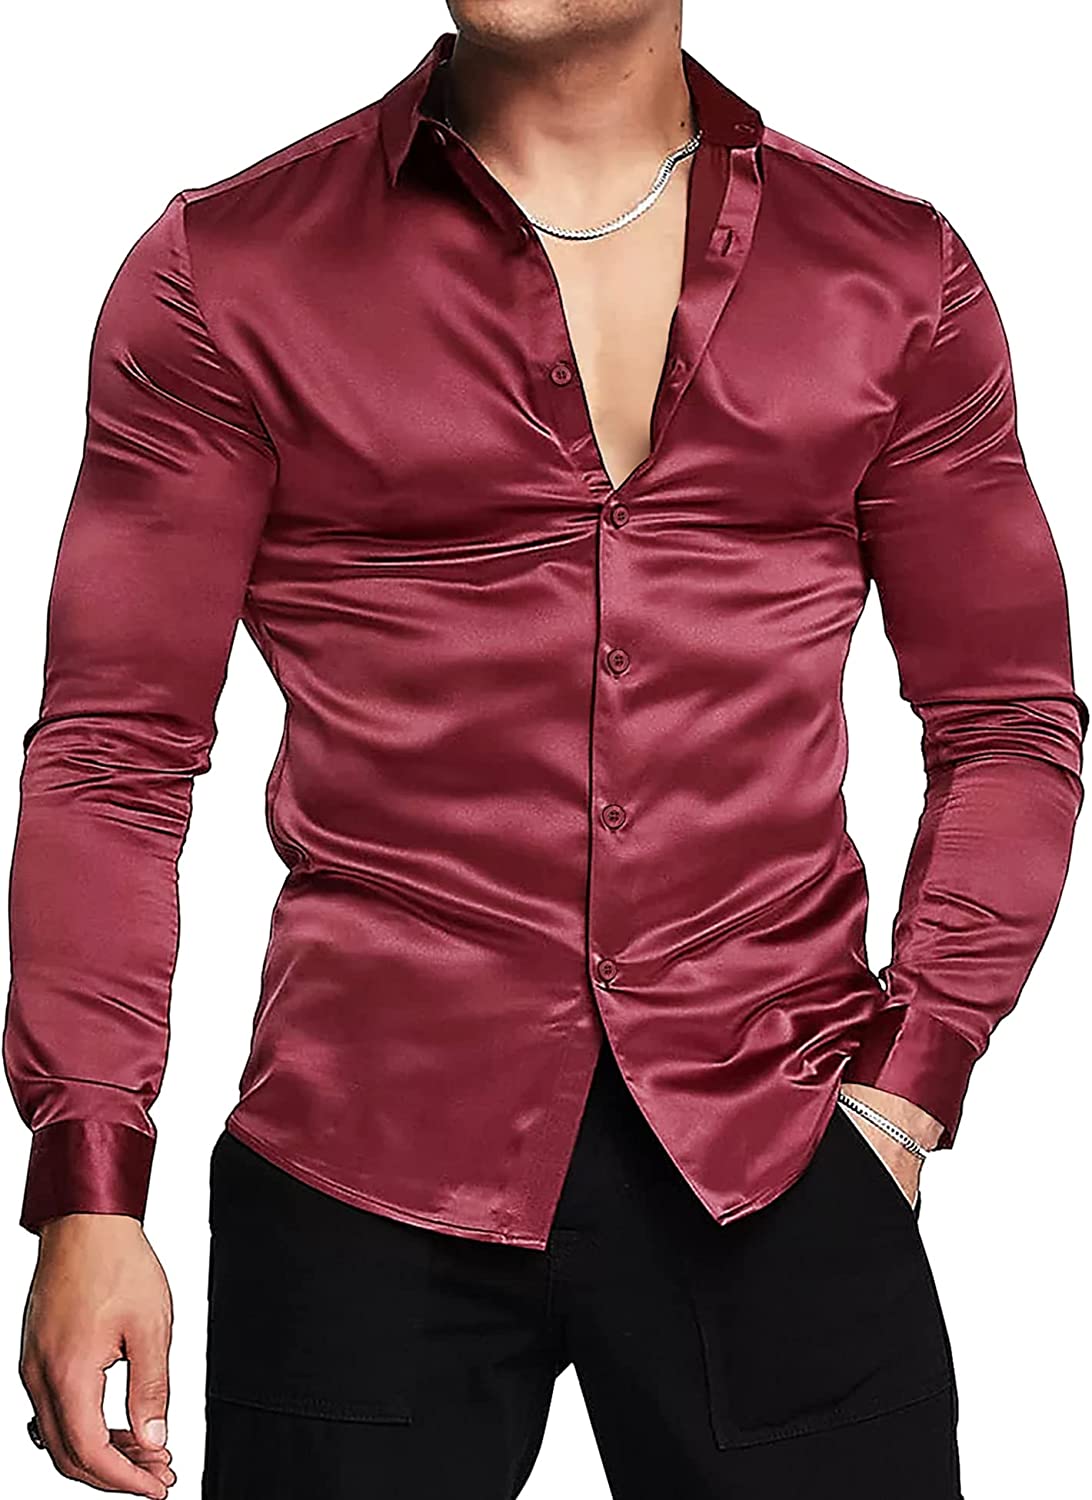 URRU Men's Luxury Shiny Silk Like Satin Dress Shirt Long Sleeve Casual Slim  Fit